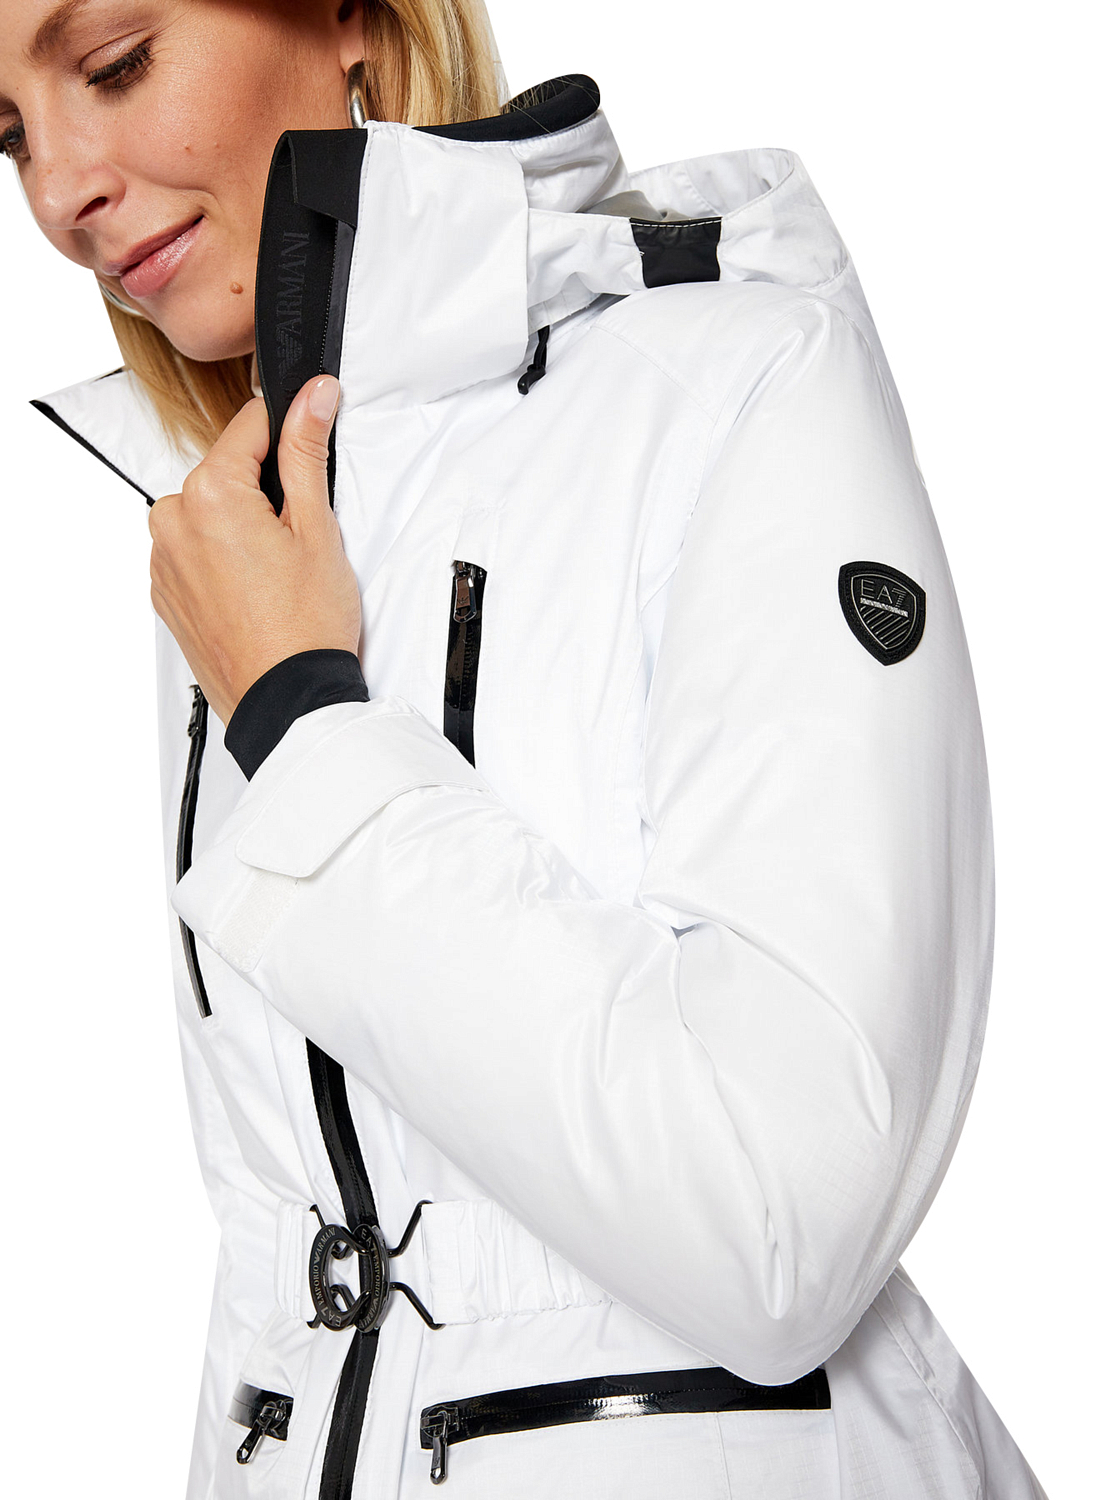 Куртка горнолыжная EA7 Emporio Armani 2020-21 SKI W JKT 7 White